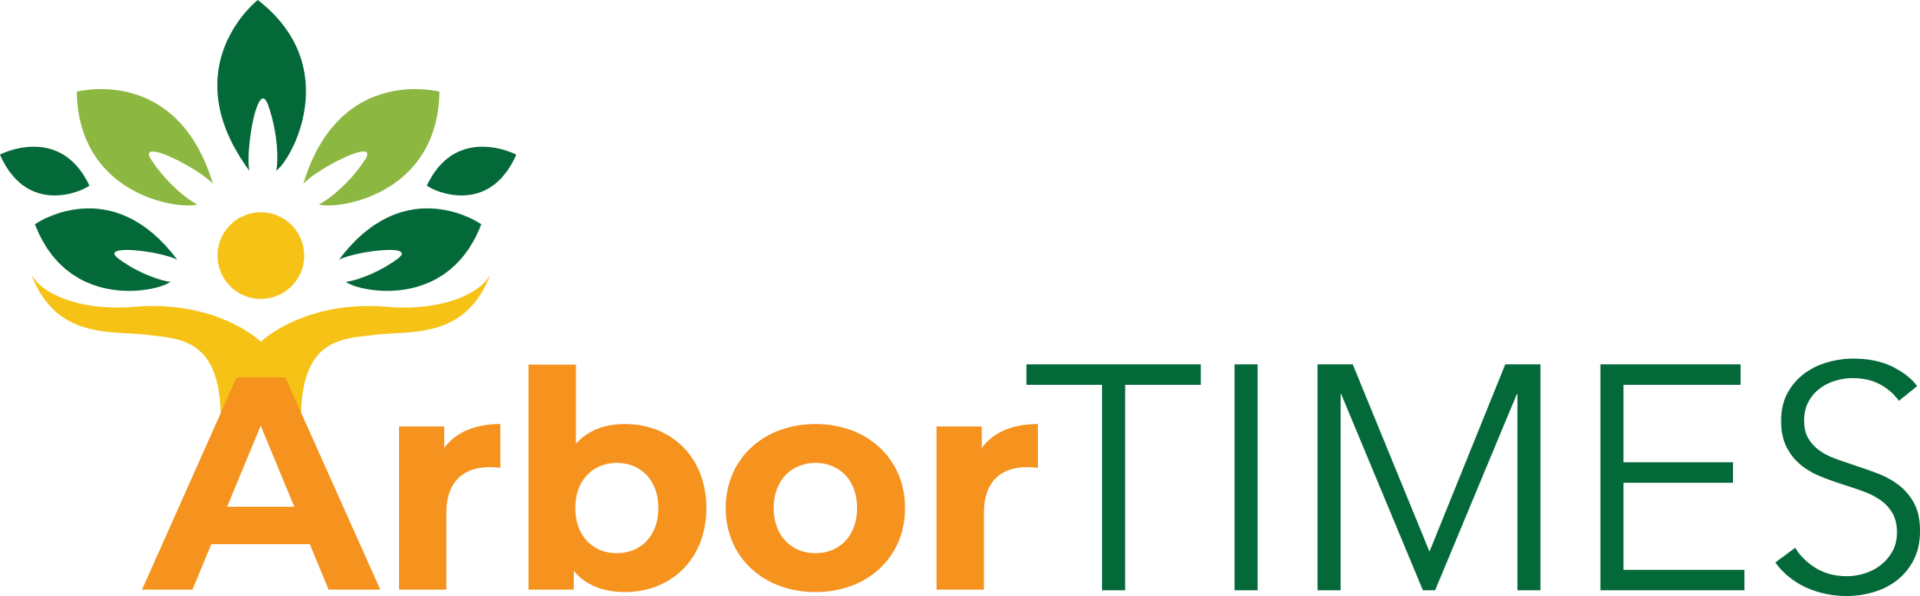 ArborTimes-logo-Horizontal-transparent